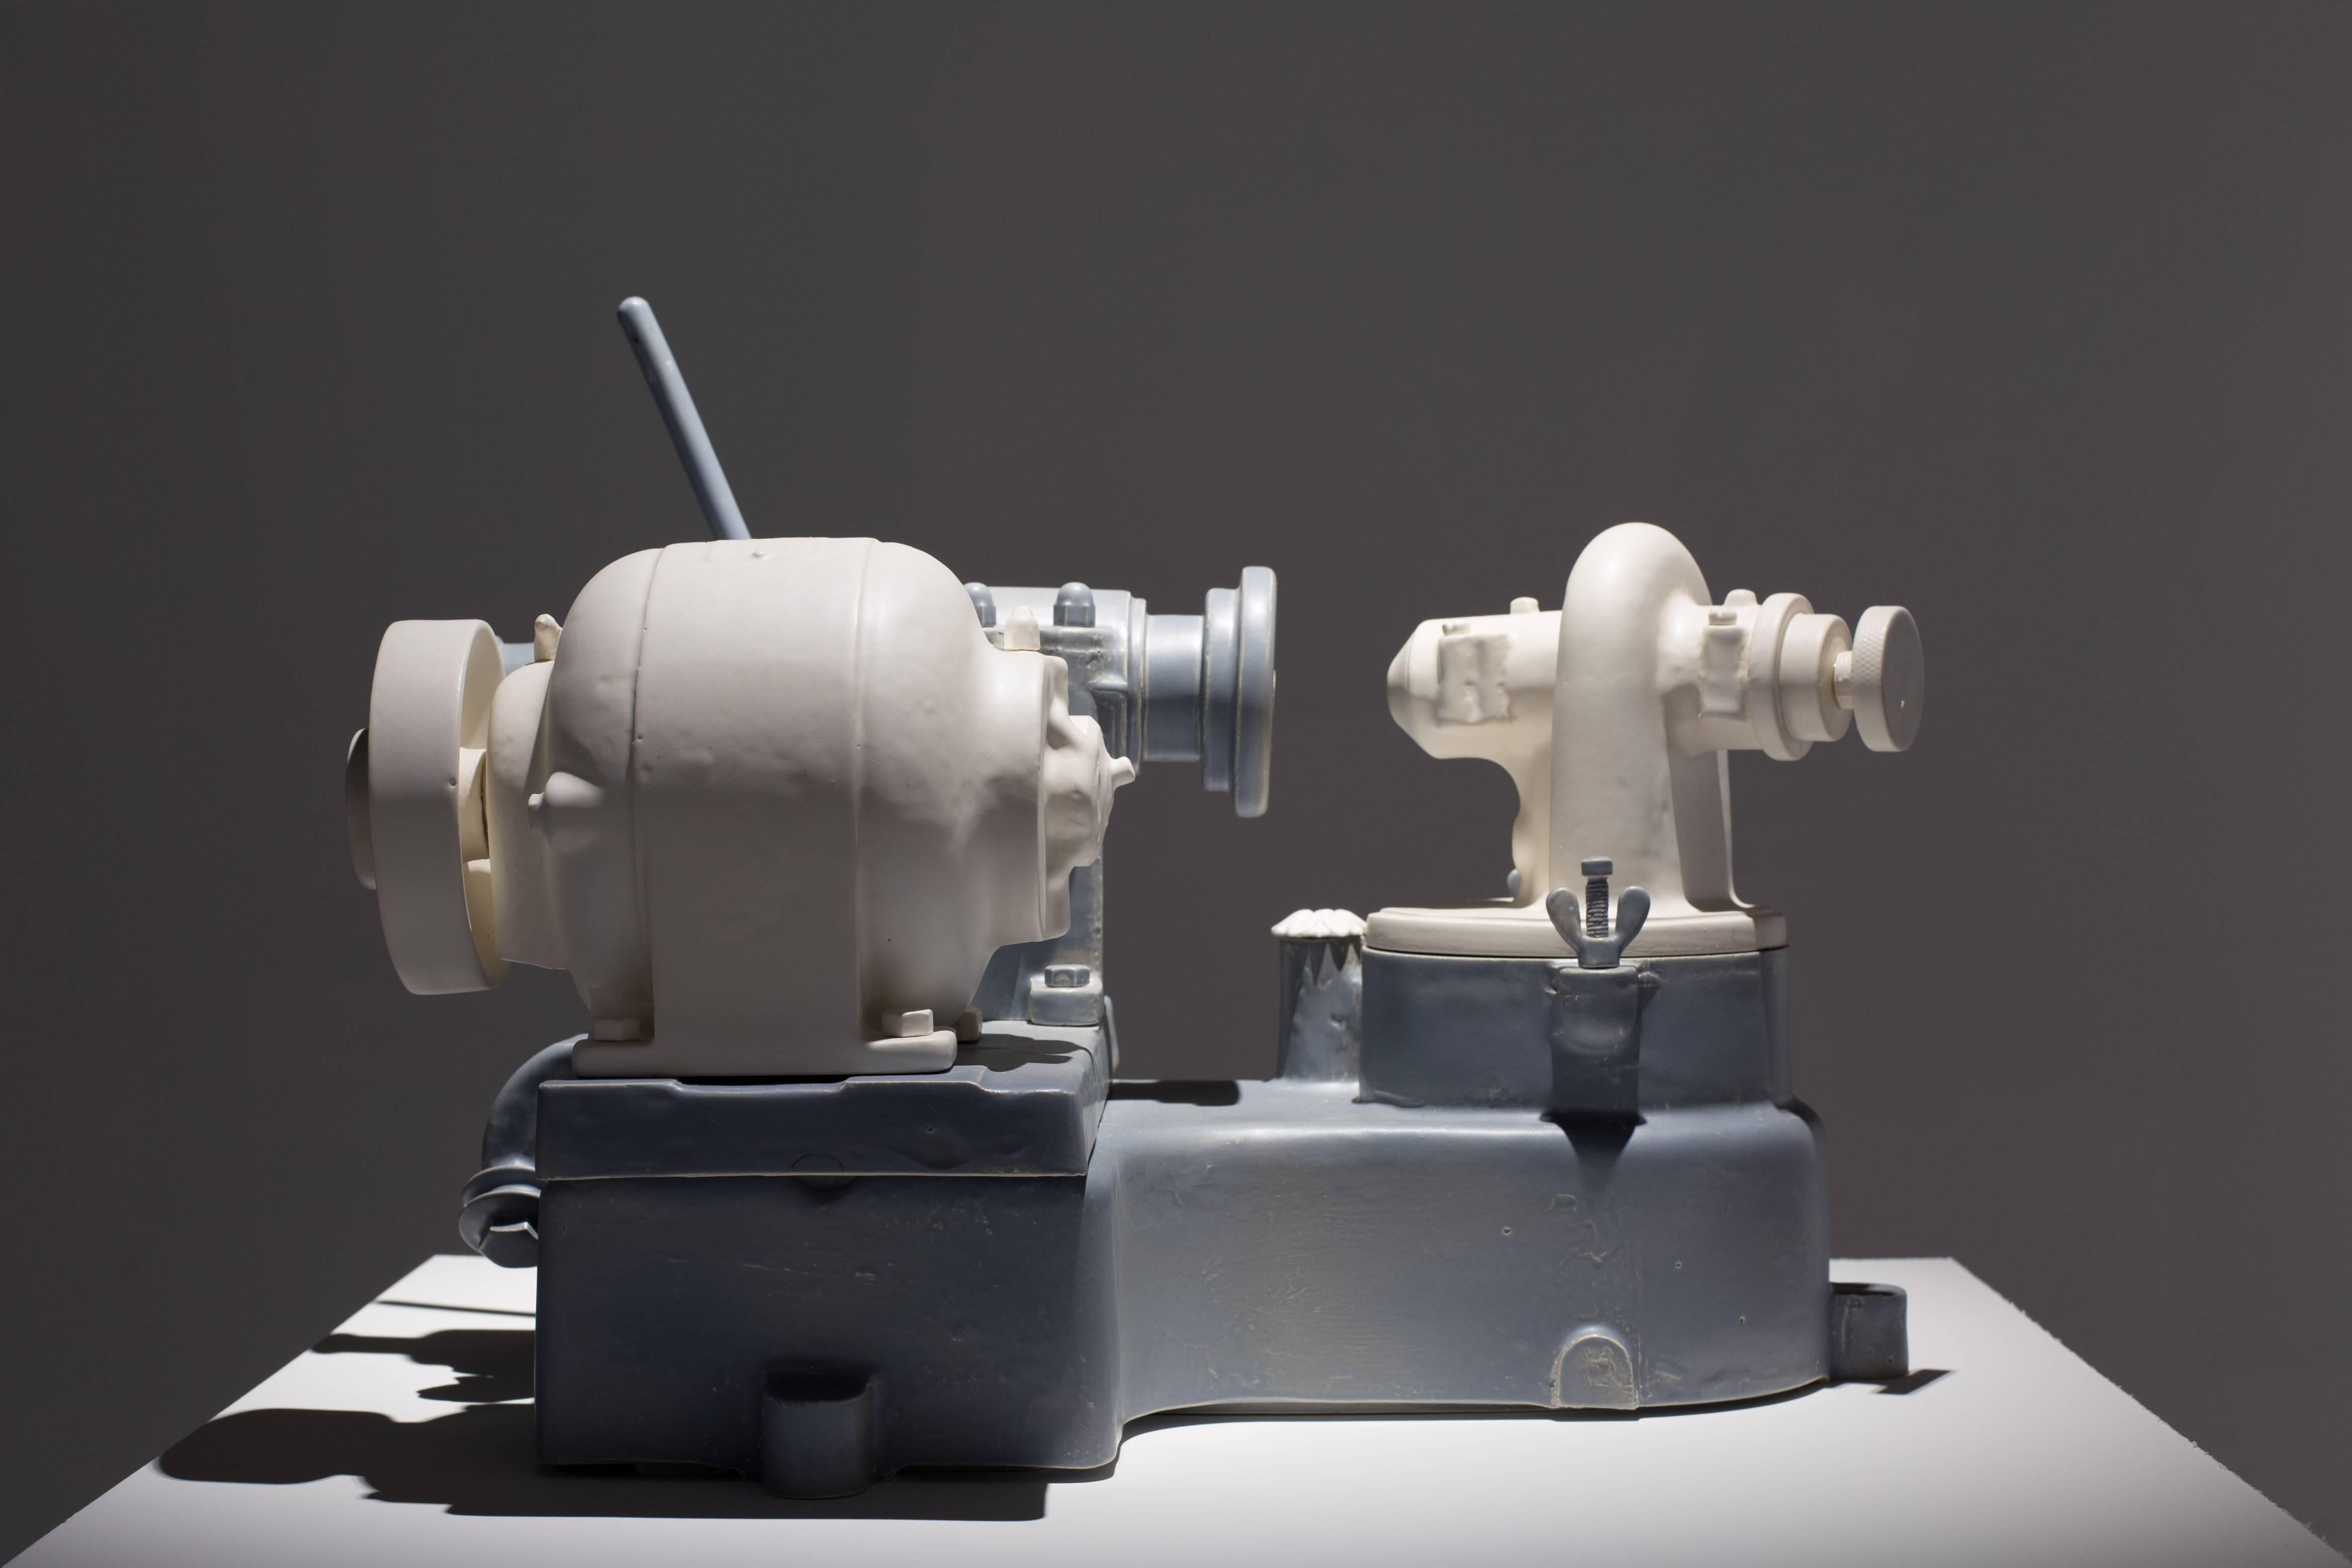 Satin-valve-grinder - Sculpture by Clint Neufeld